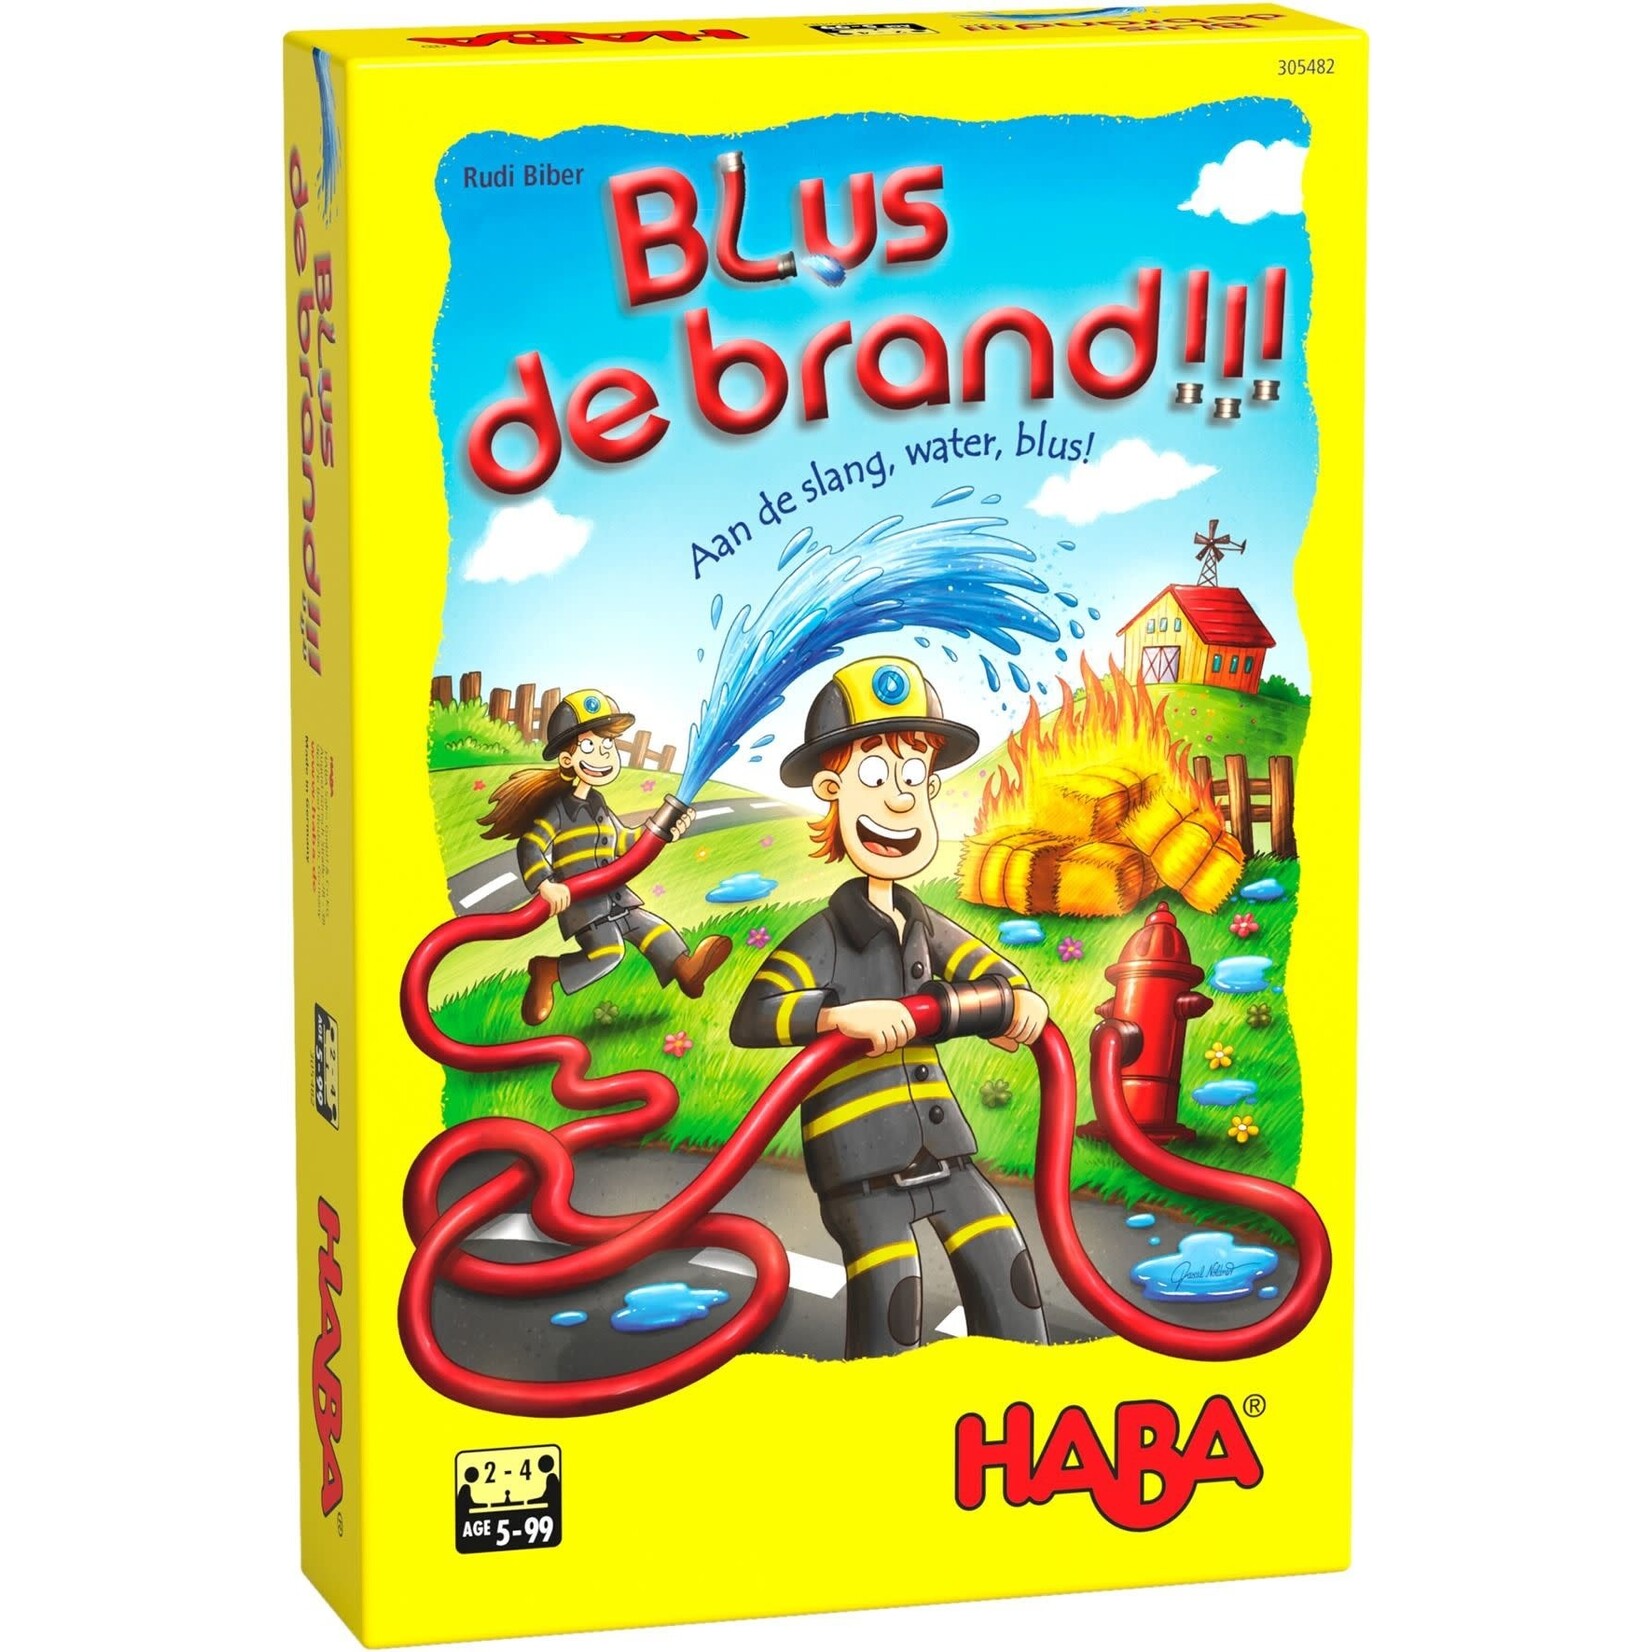 Haba Haba 305482 Blus de  brand!!!